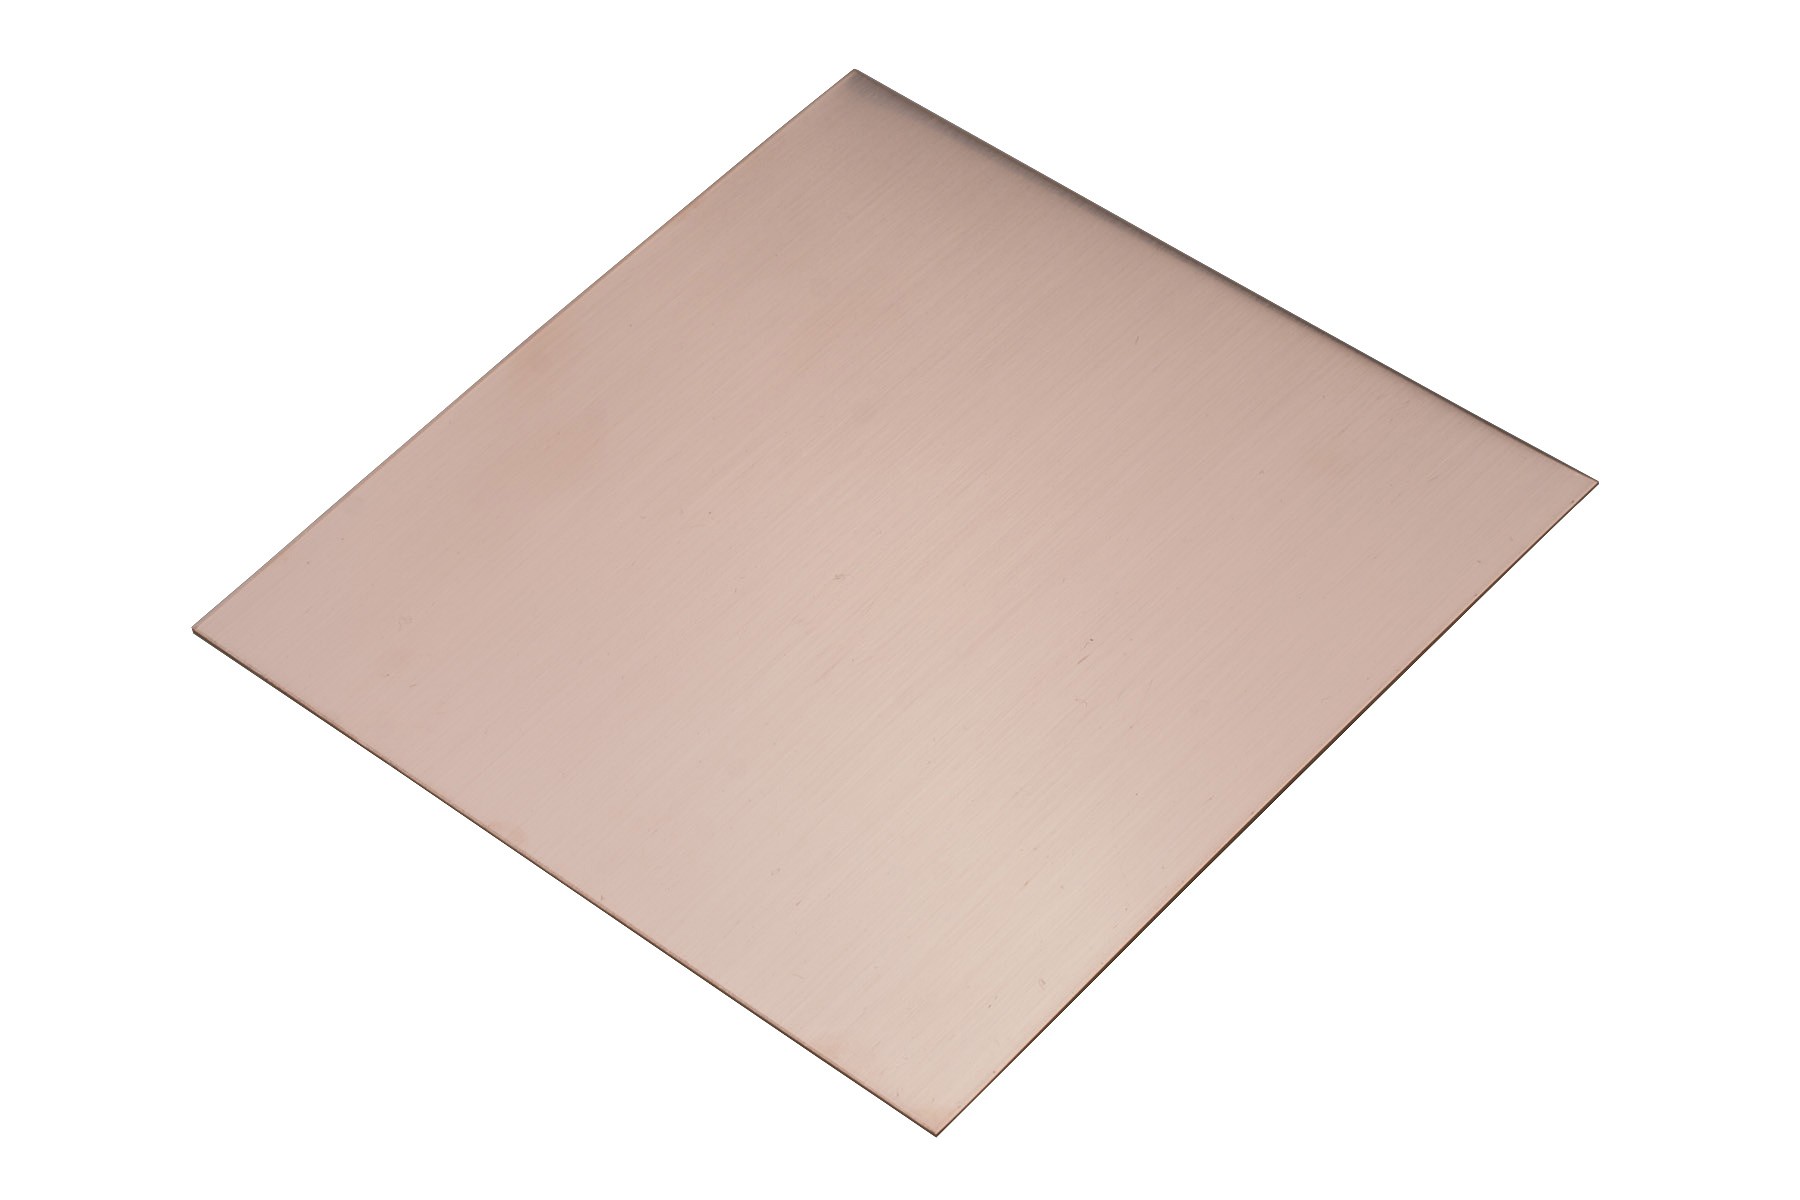 6" x 6" Copper Sheet - 28 Gauge